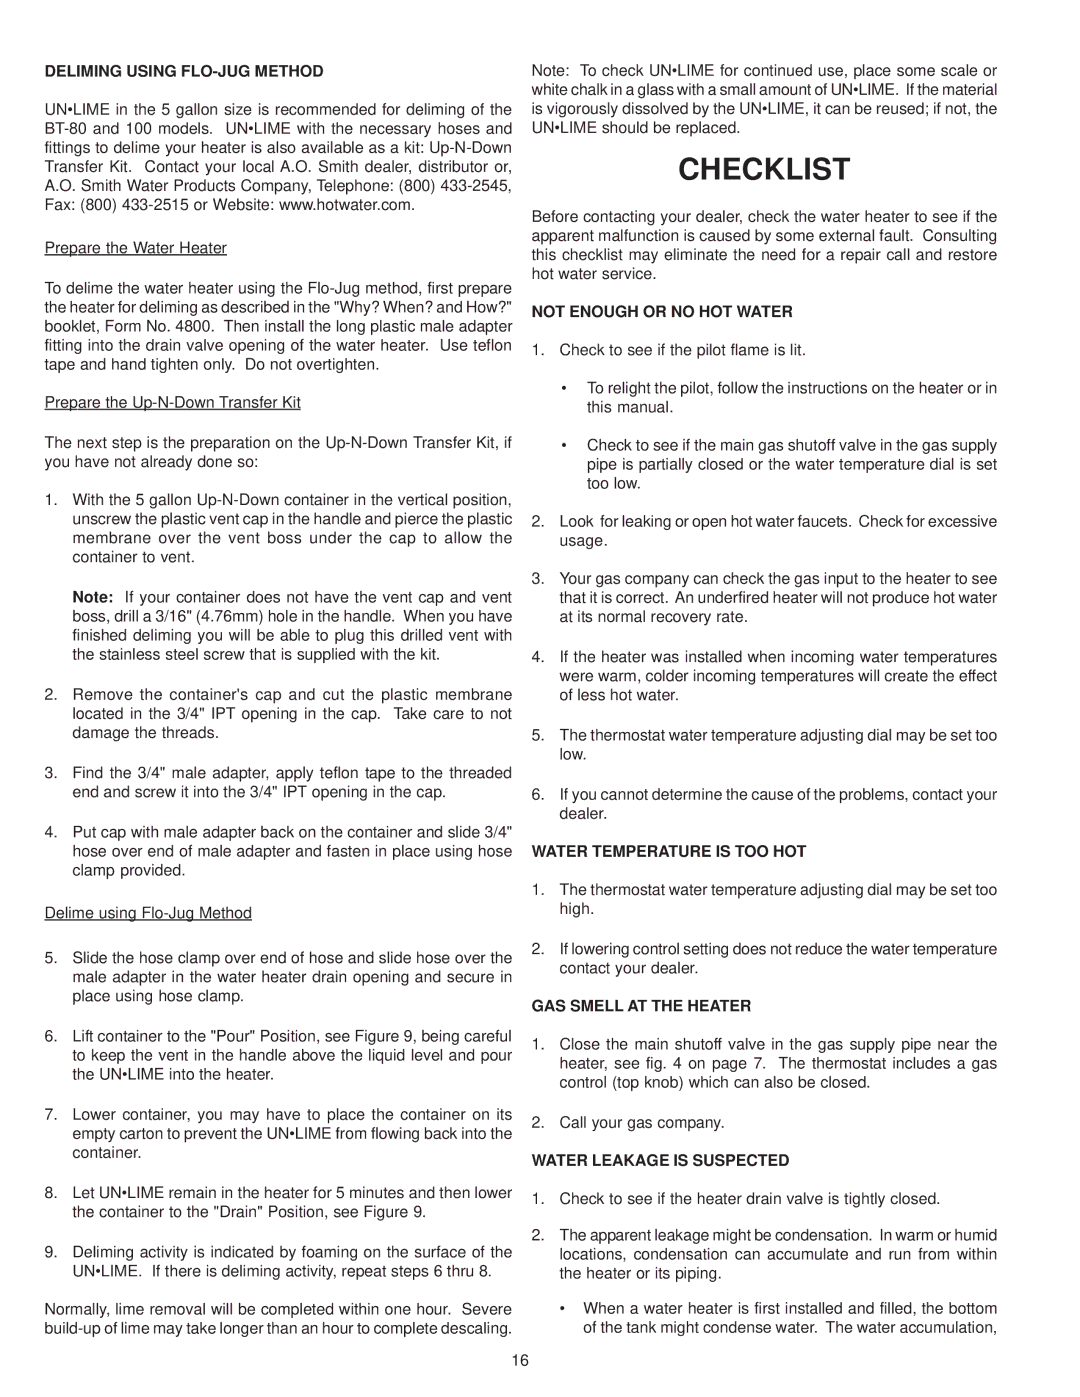 A.O. Smith BT- 80 warranty Checklist 